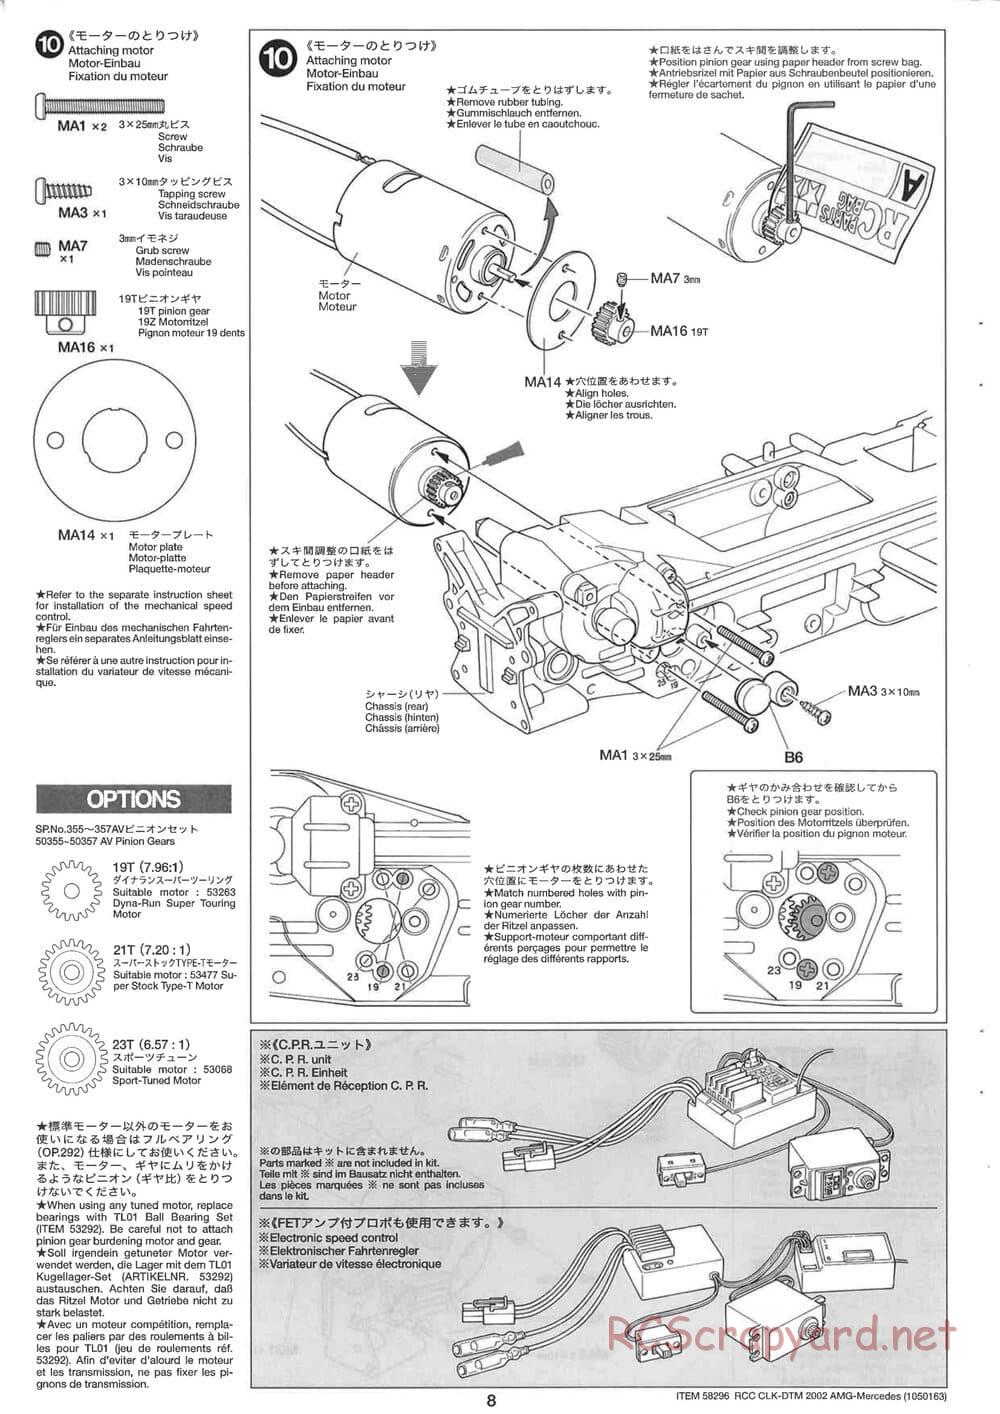 Tamiya - CLK DTM 2002 AMG Mercedes - TL-01 LA Chassis - Manual - Page 8